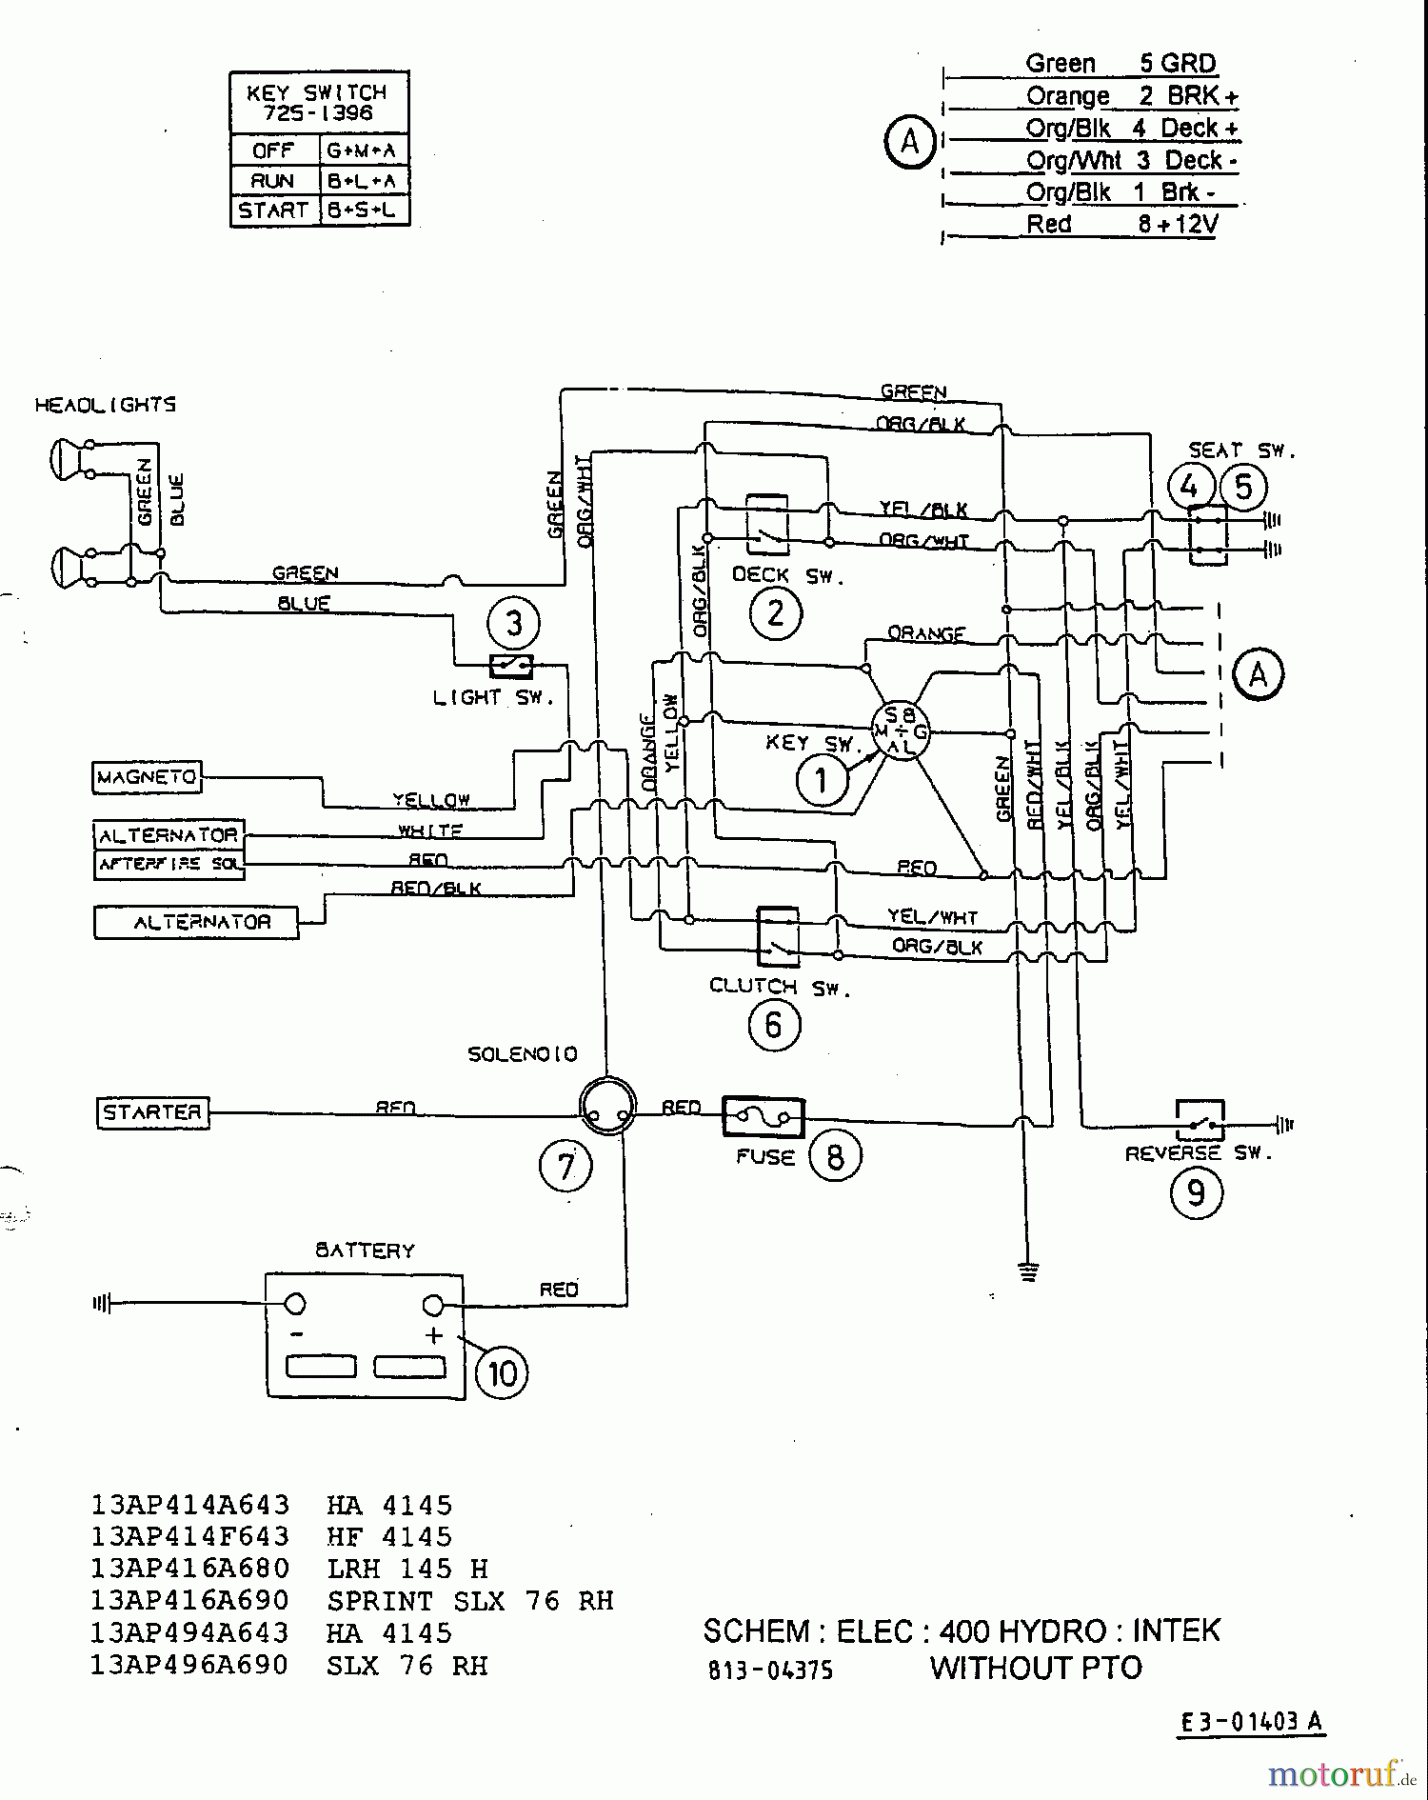  Gutbrod Rasentraktoren Sprint SLX 76 RH 13AP416A690  (2001) Schaltplan Intek ohne Elektromagnetkupplung